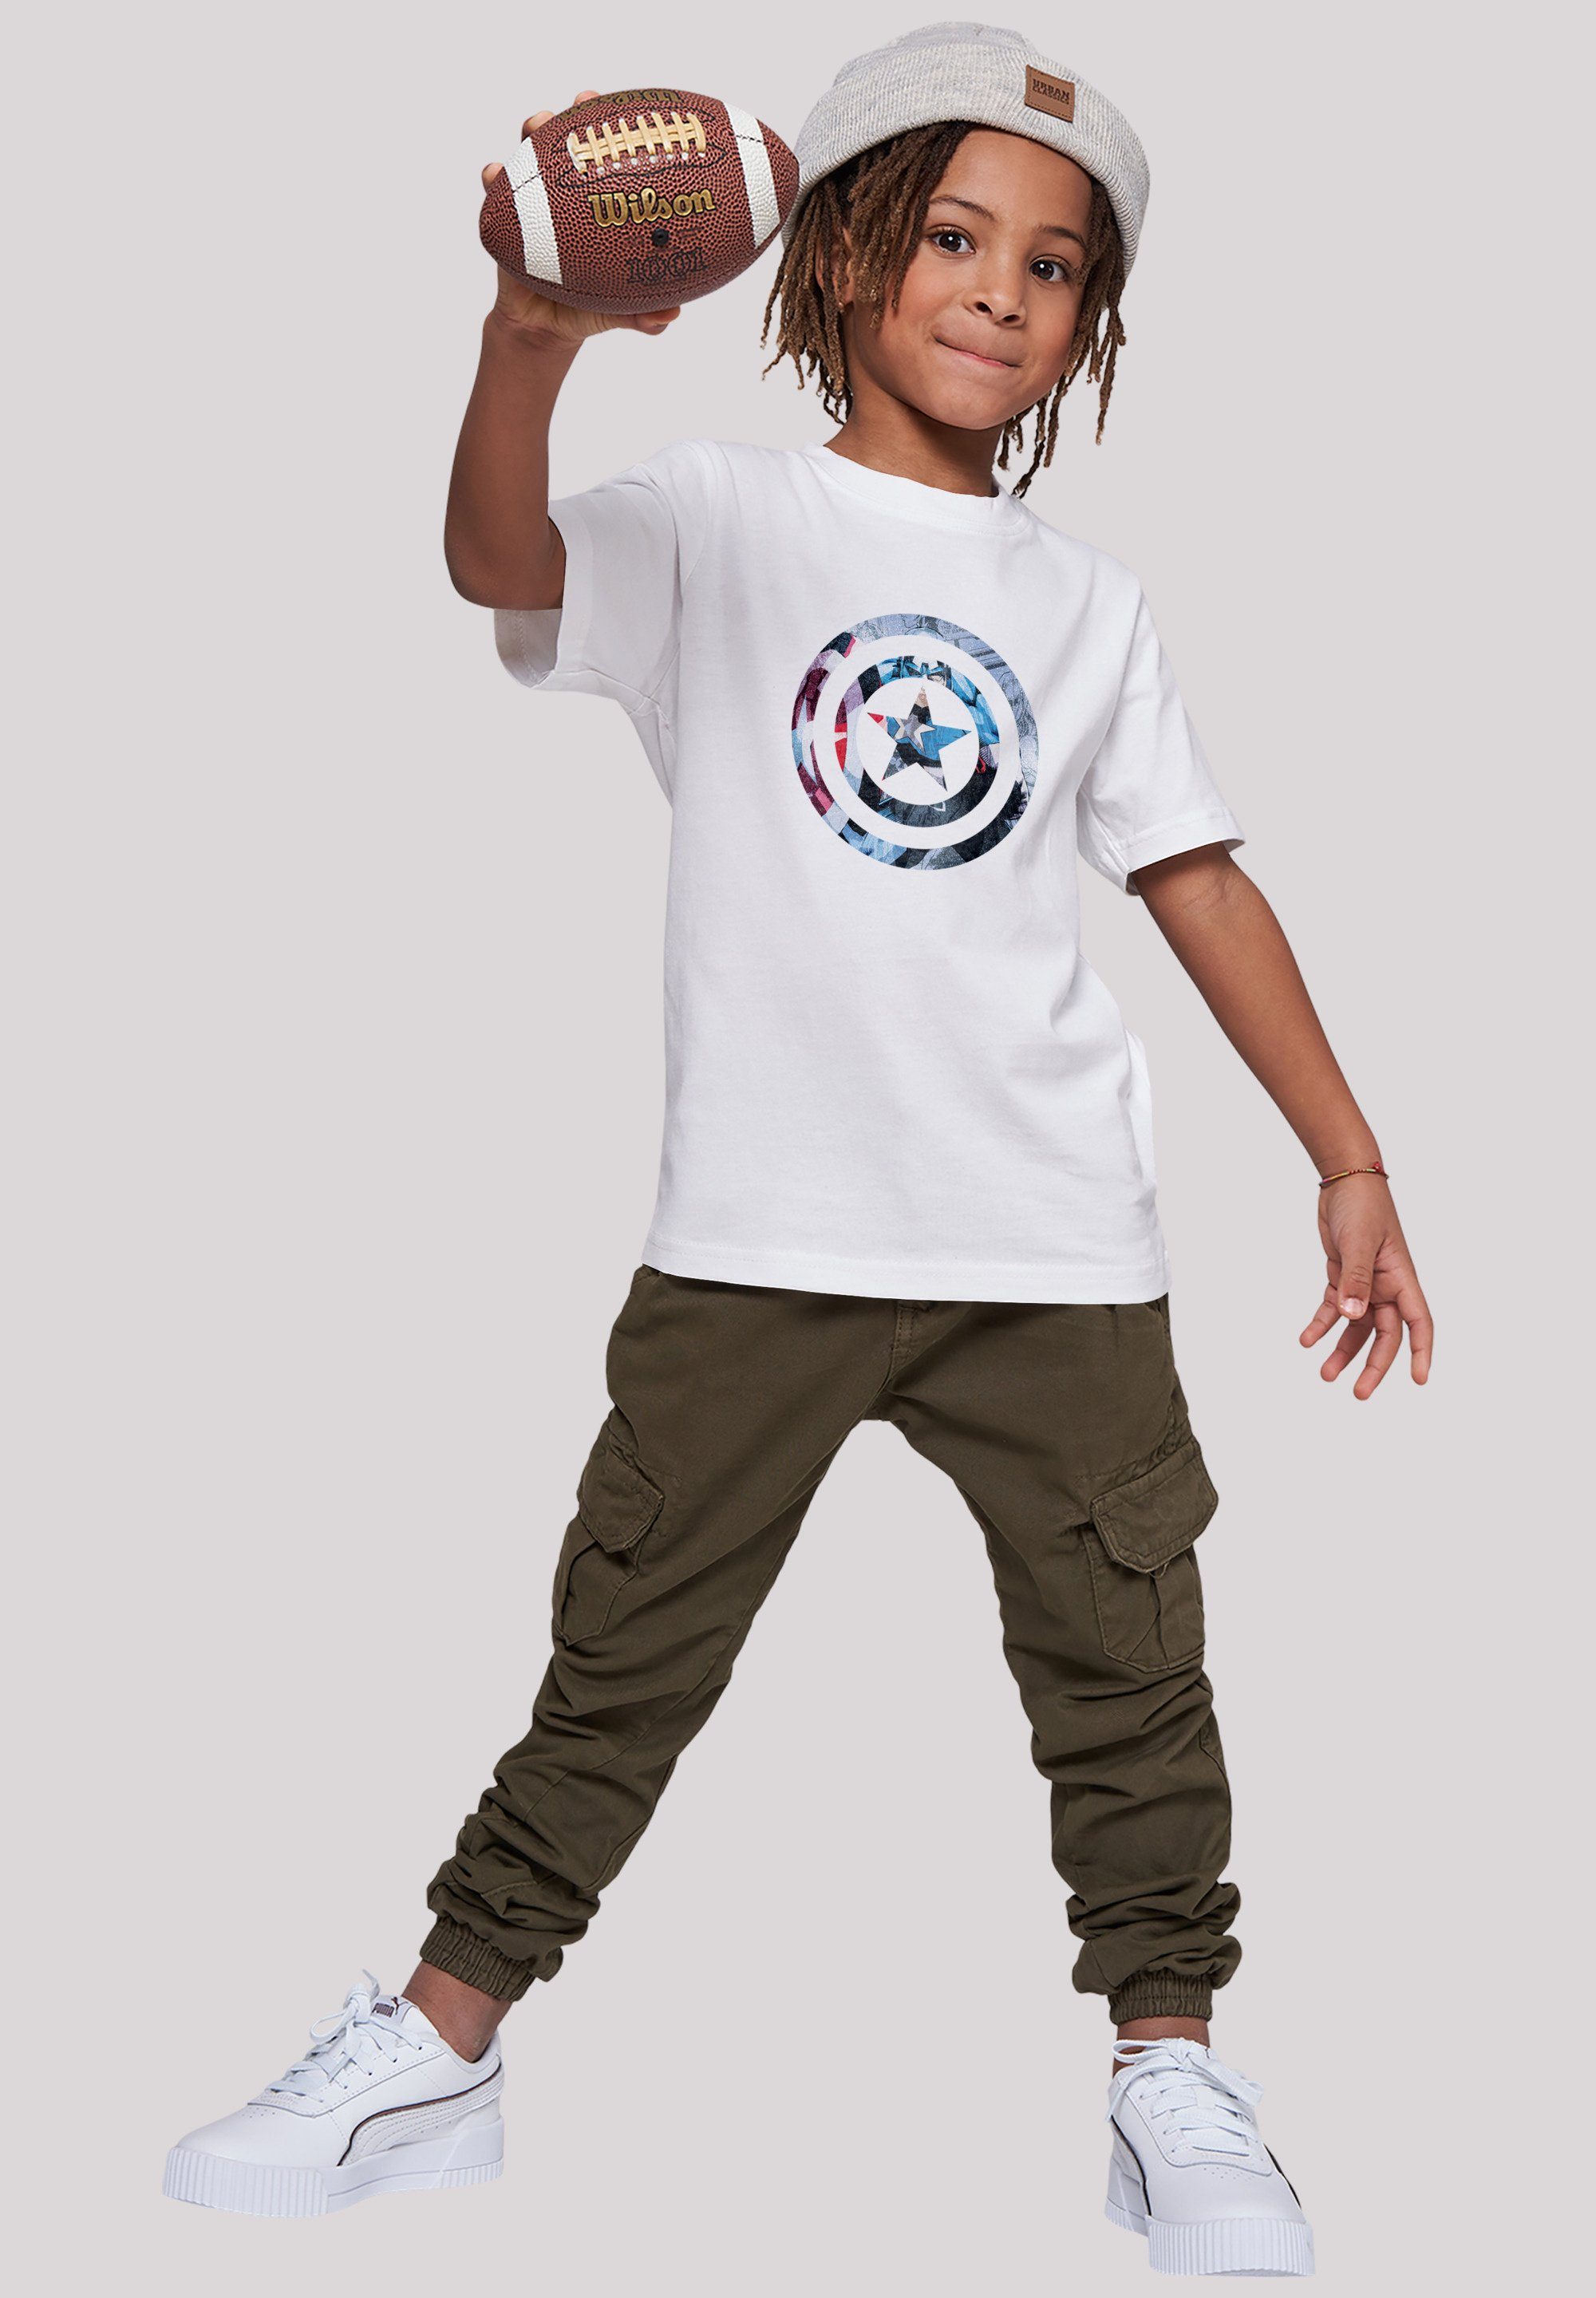 F4NT4STIC T-Shirt Marvel Superhelden Avengers Unisex Merch,Jungen,Mädchen,Logo Print America Montage Symbol Kinder,Premium Captain